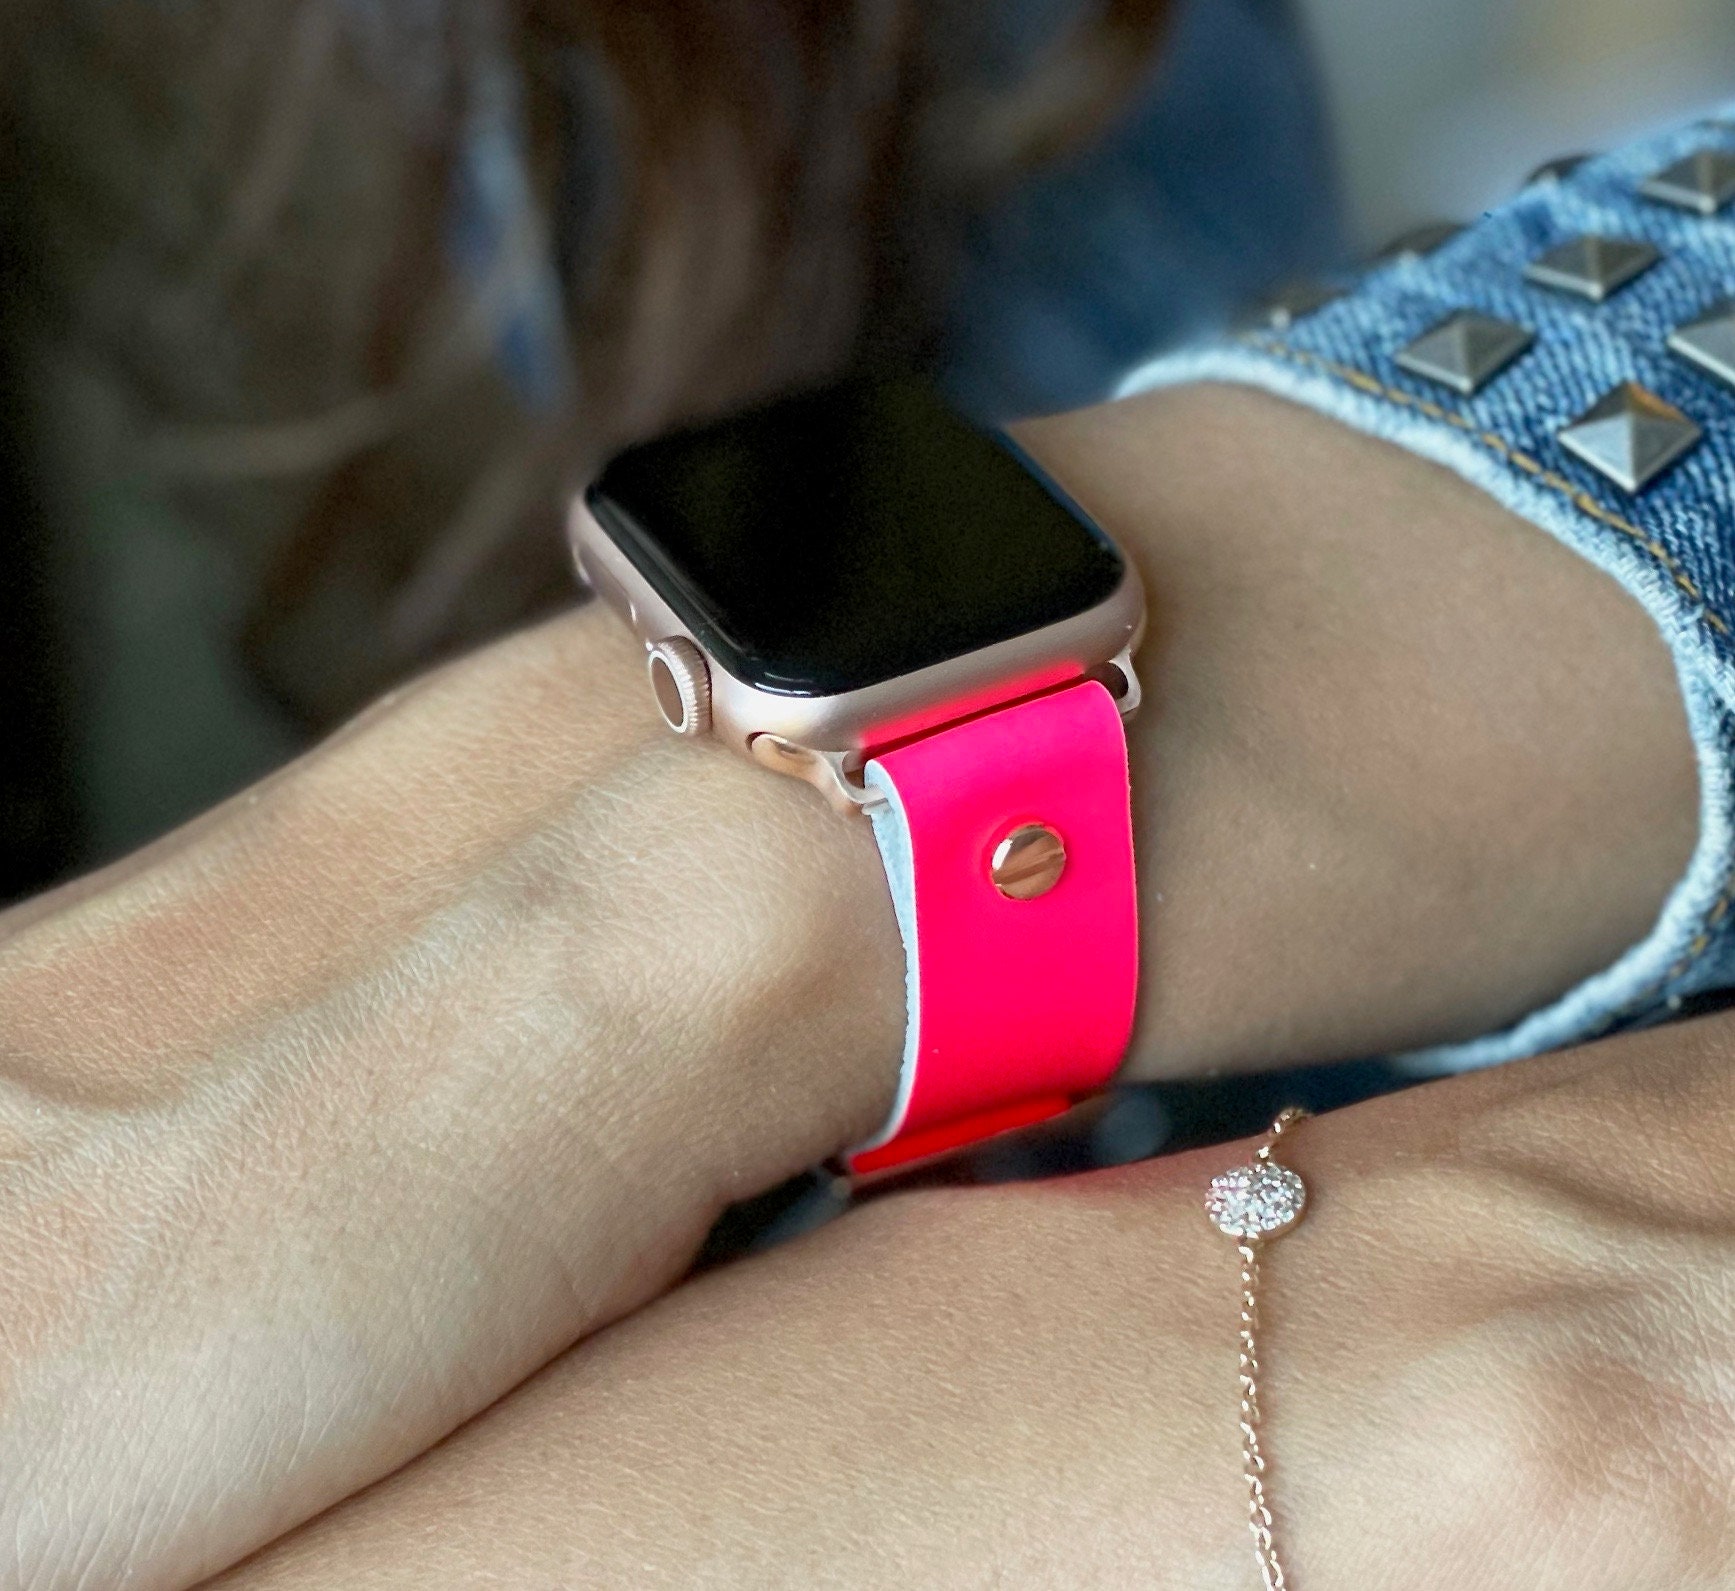 Buy Fuchsia Pink Glow in the Dark Apple Watch Band Online